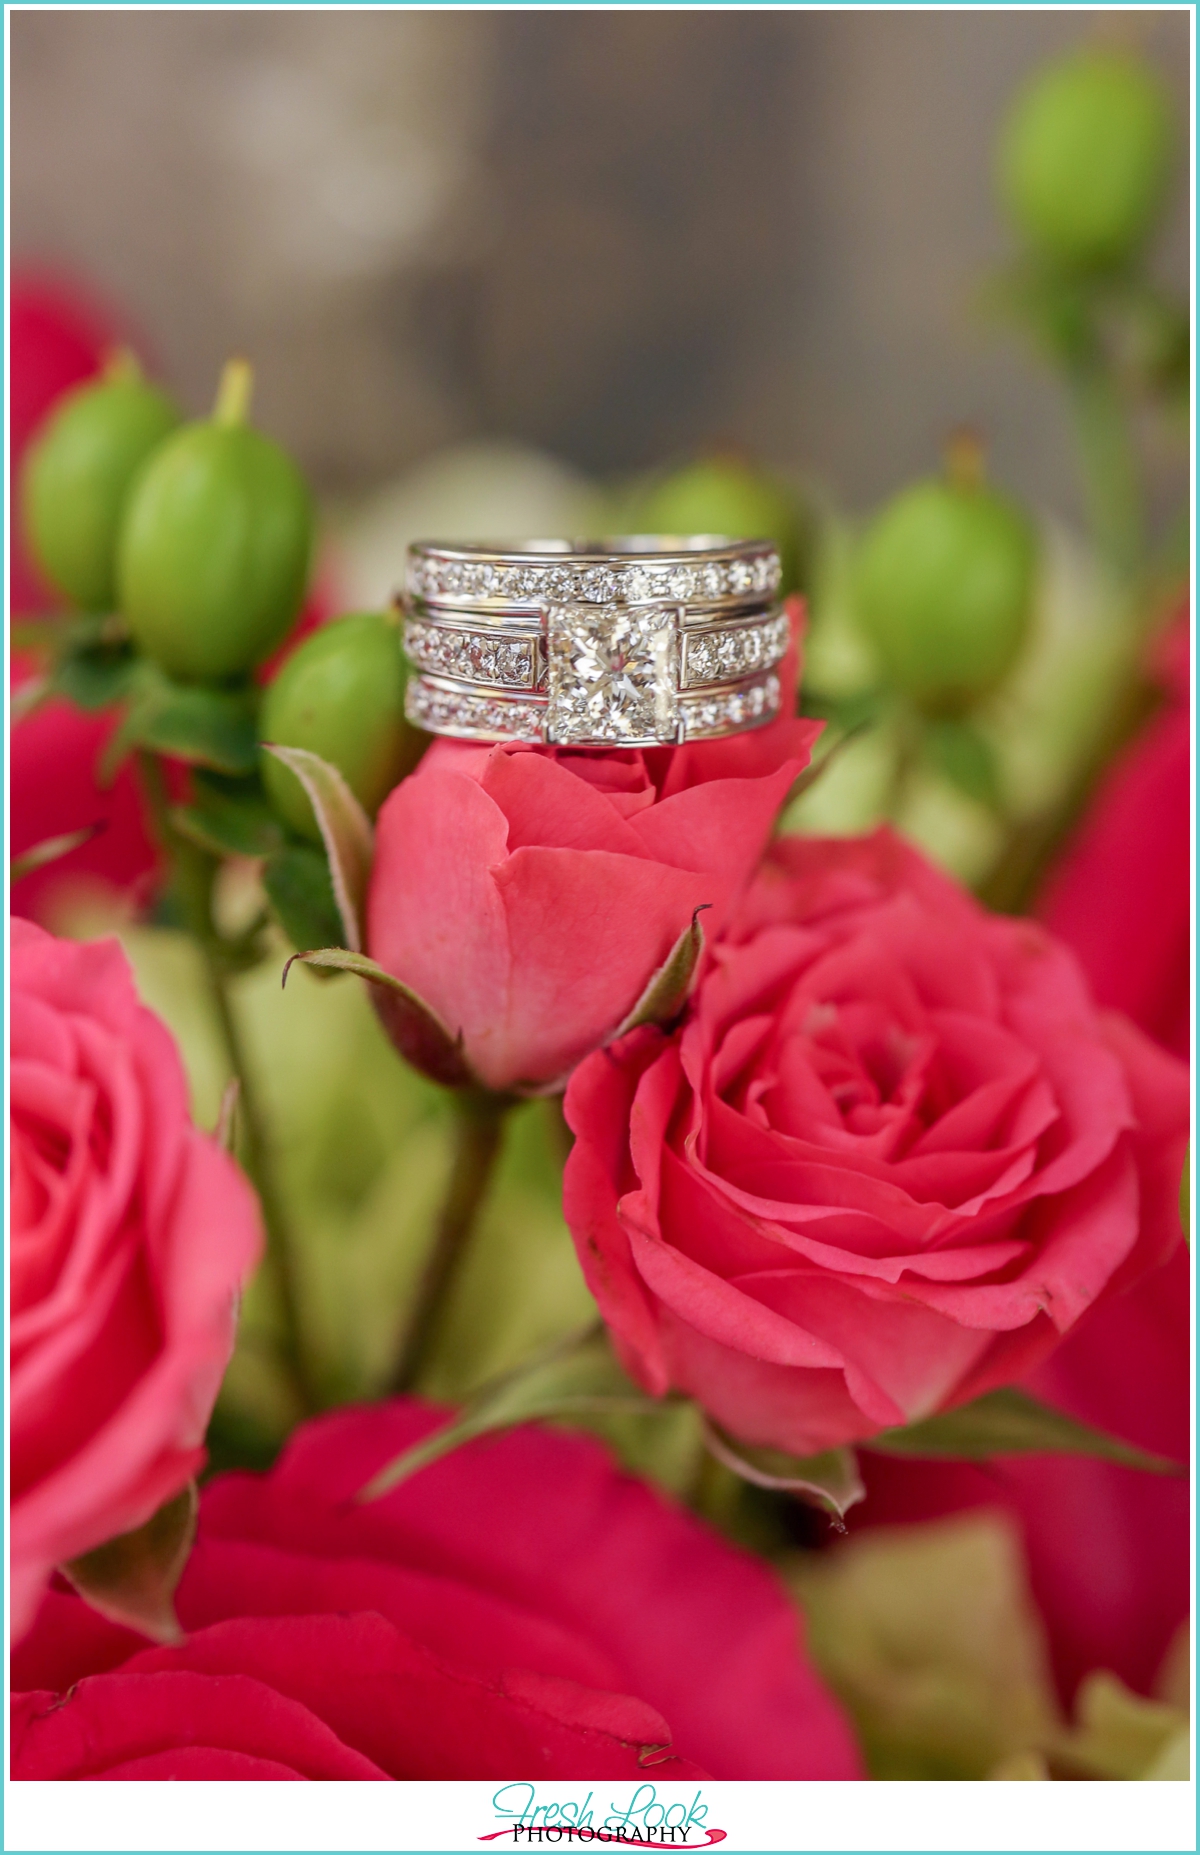 princess cut engagement ring and roses